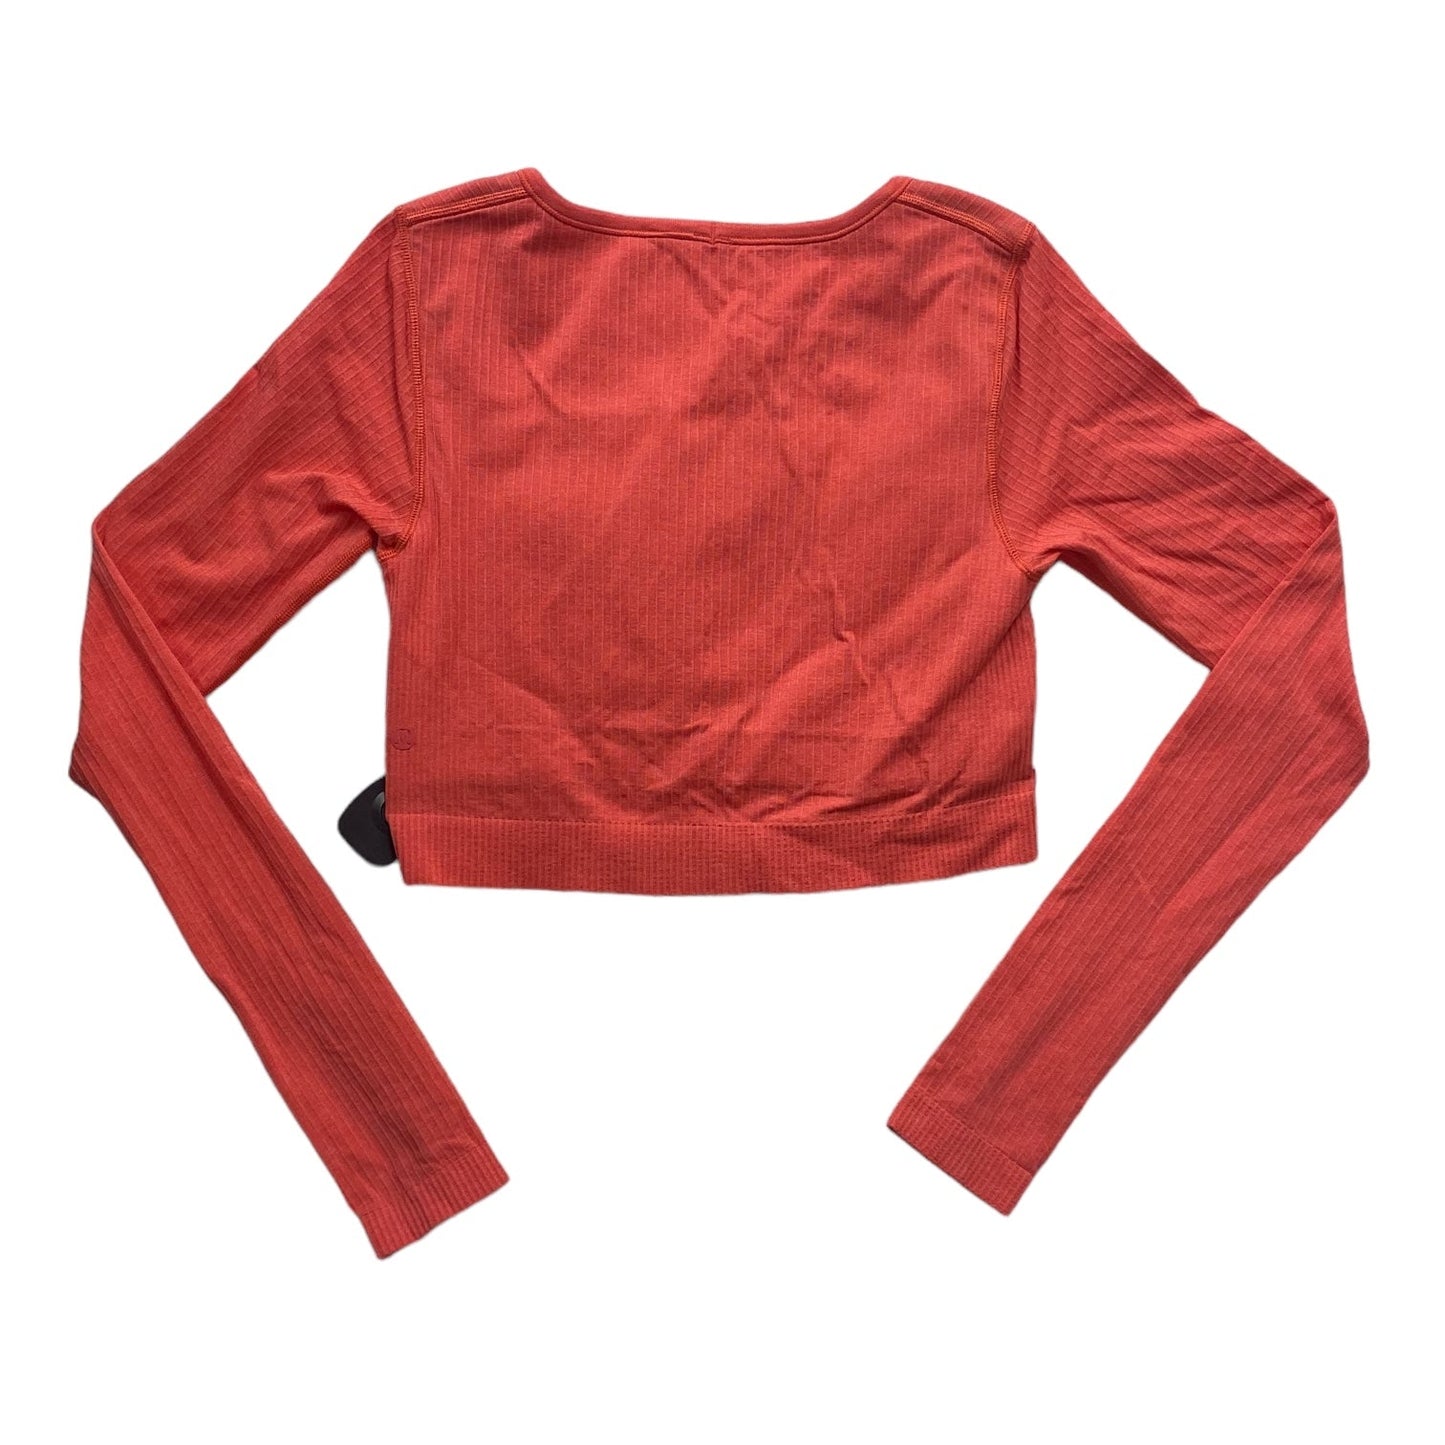 Pink Athletic Top Long Sleeve Collar Lululemon, Size 8